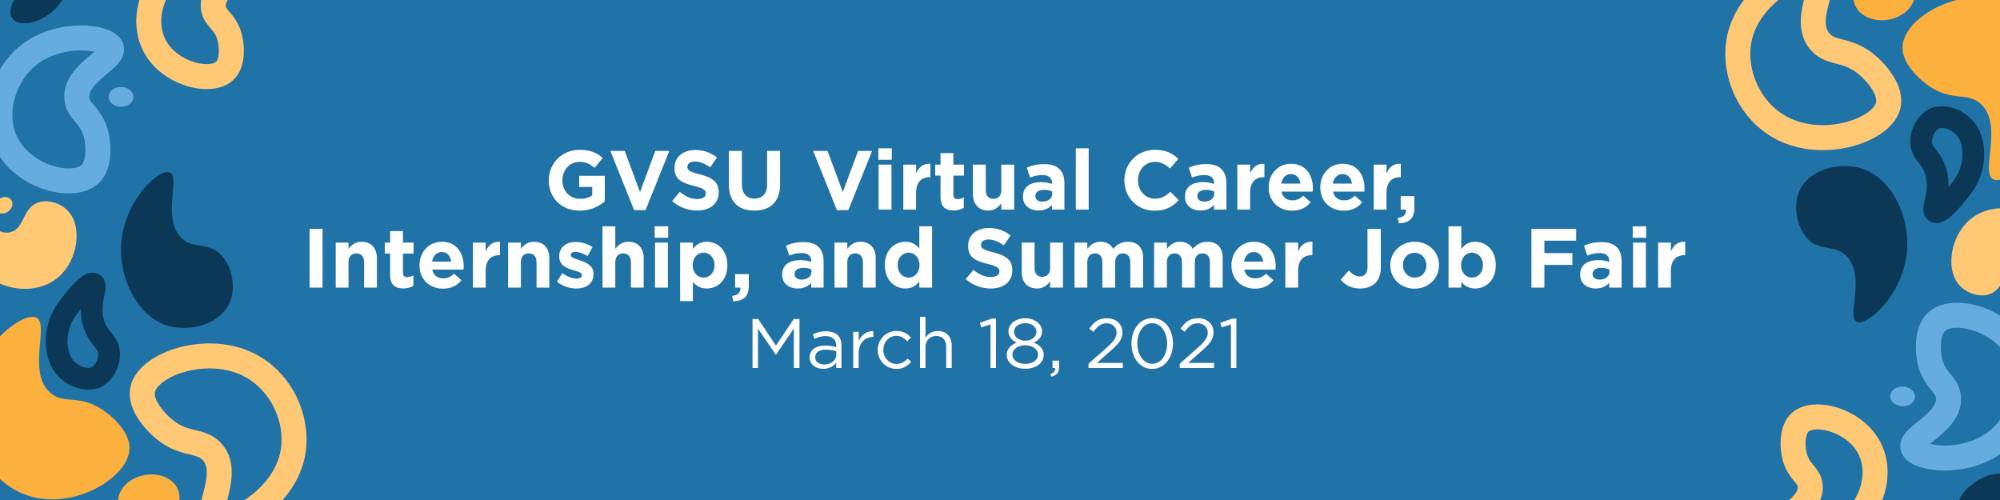 GVSU Virtual Career, Internship, and Summer Job Fair